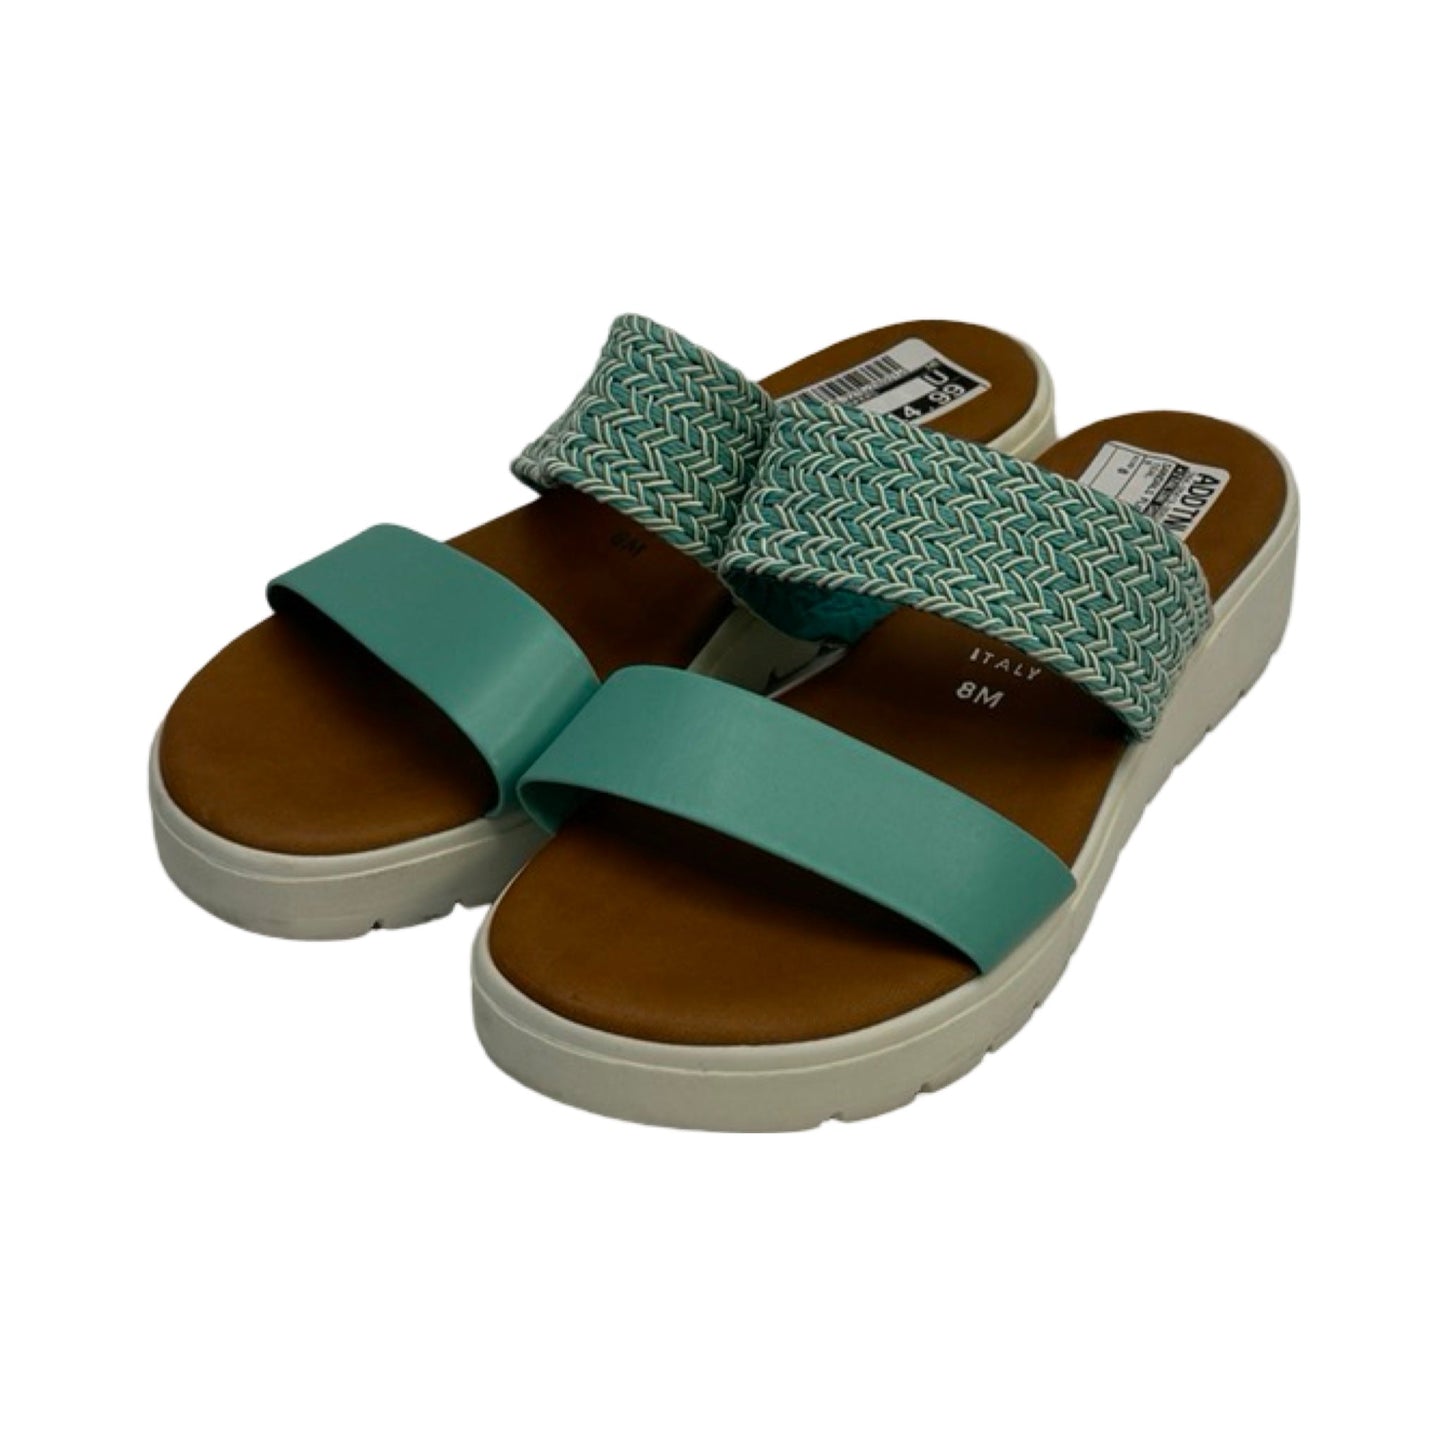 Teal Sandals Flats Italian Shoemakers, Size 8